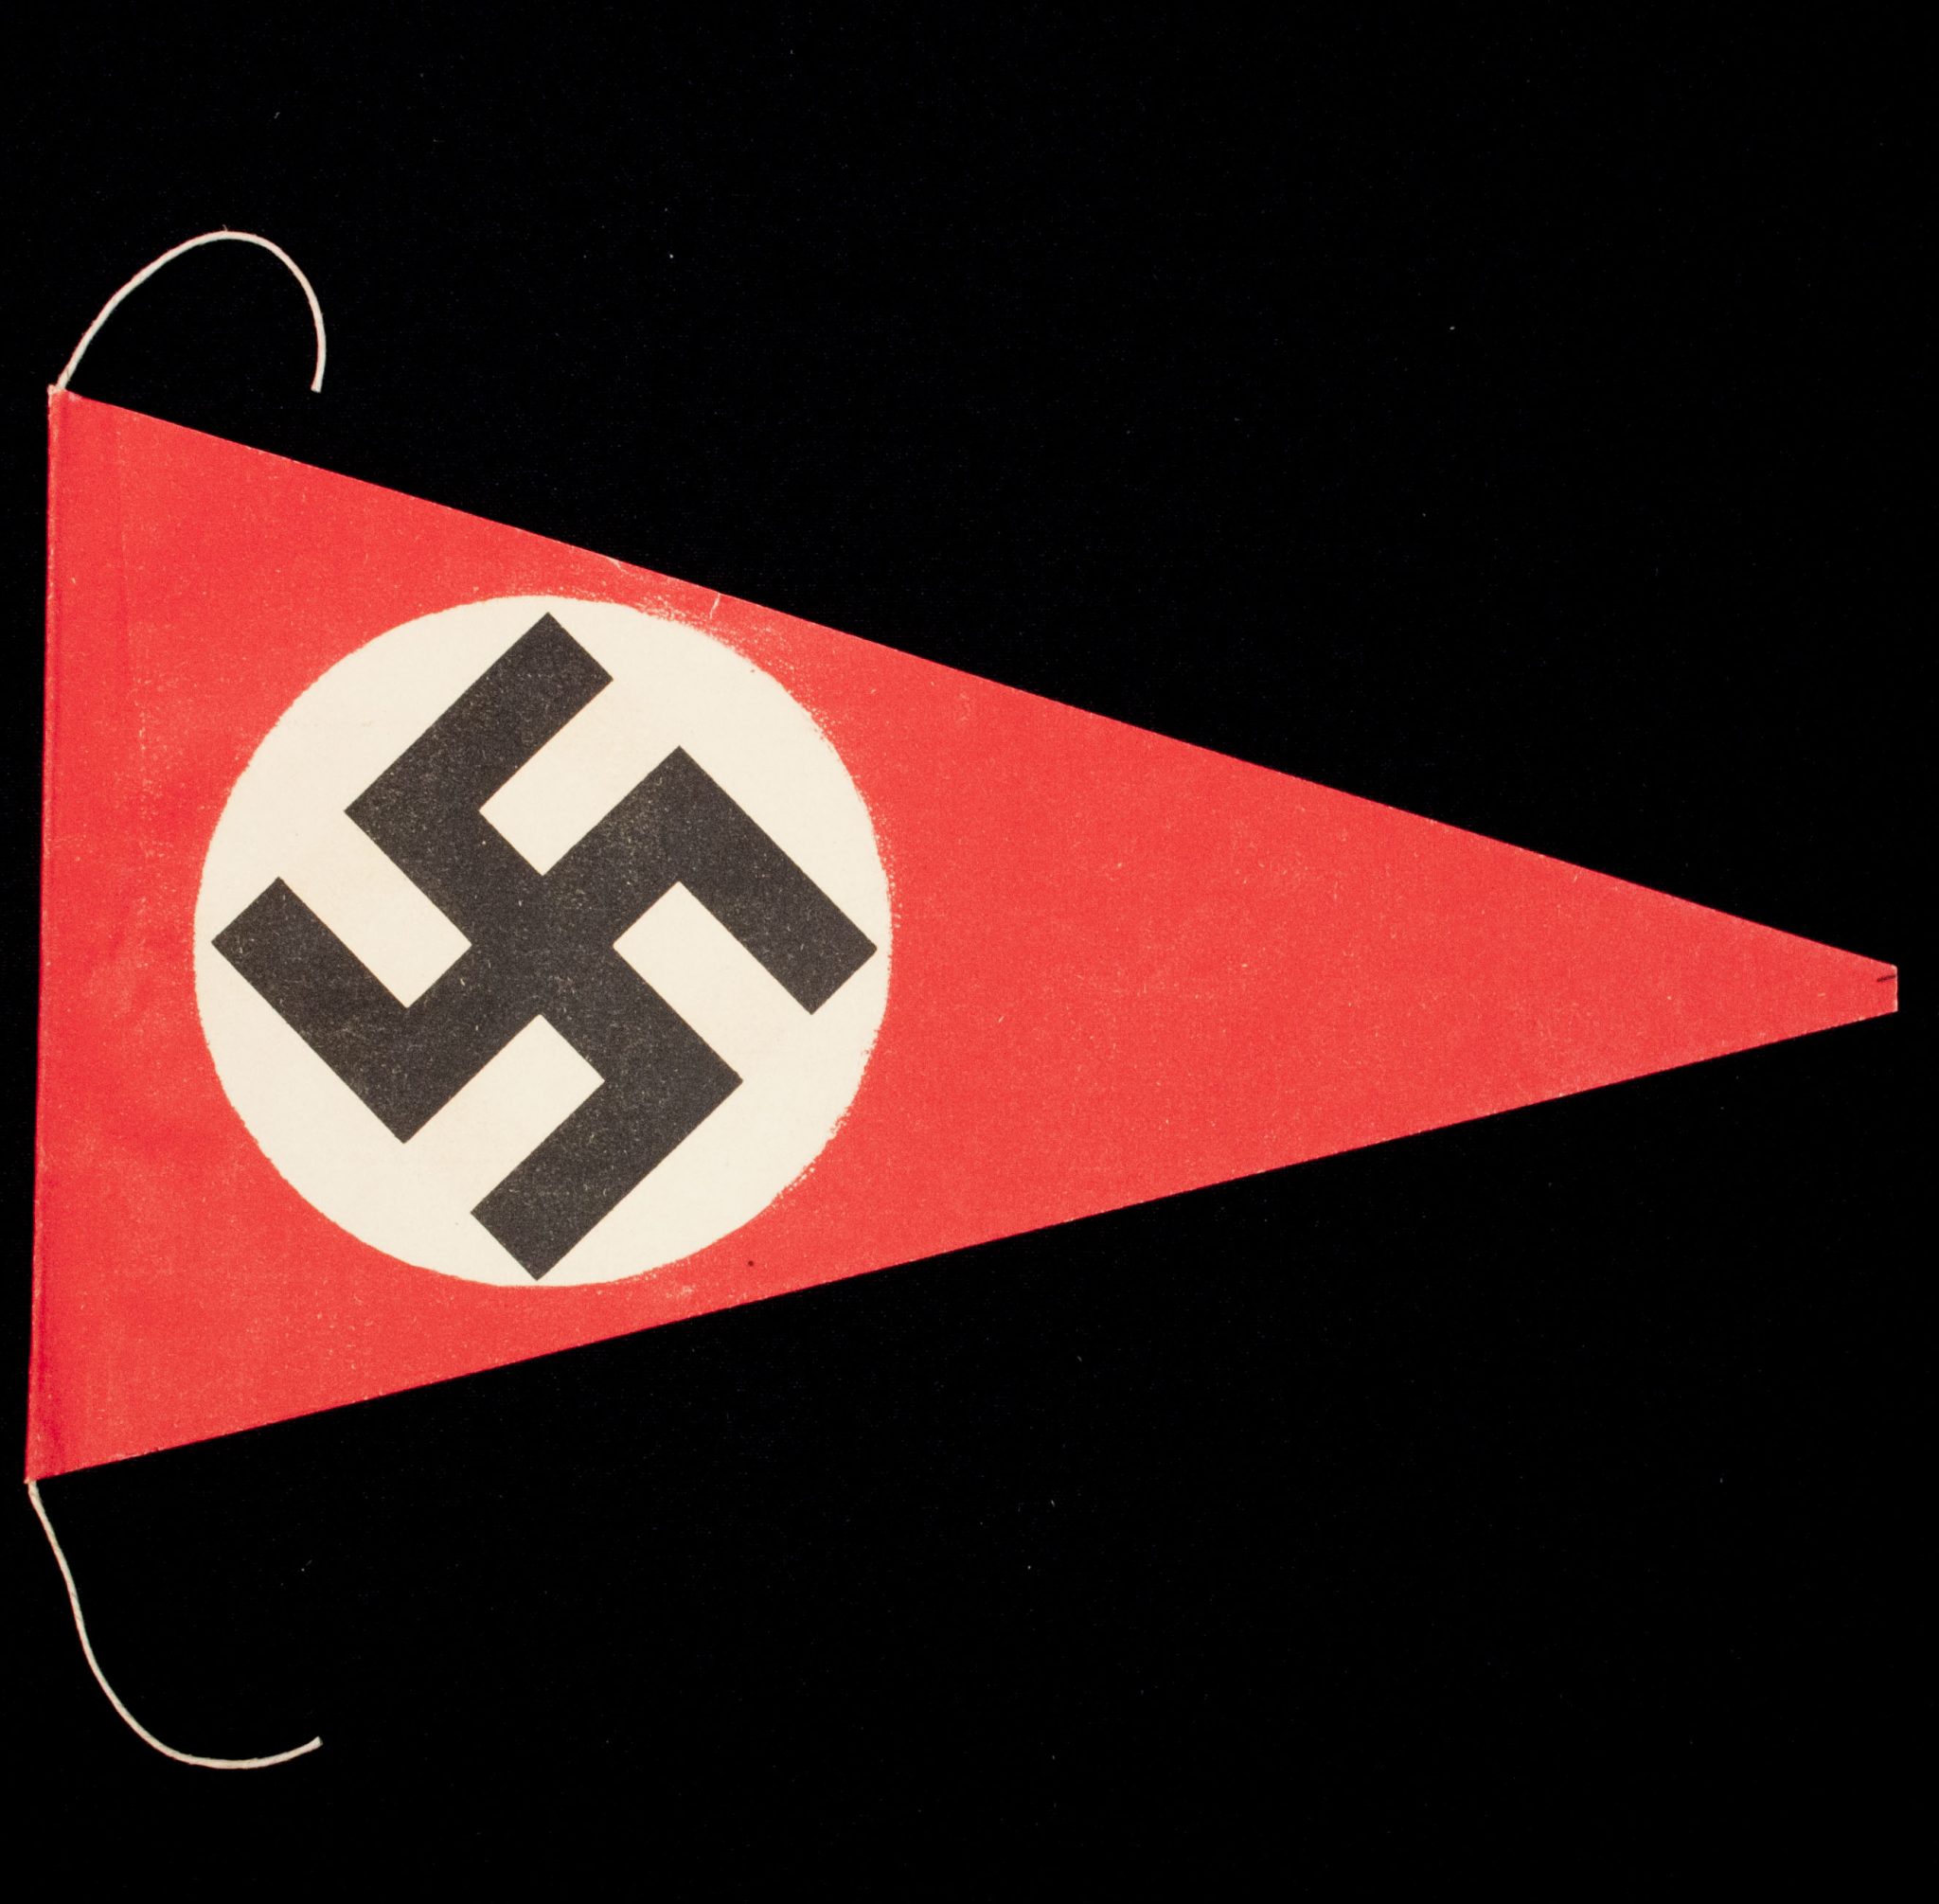 WWII German paper propaganda flag